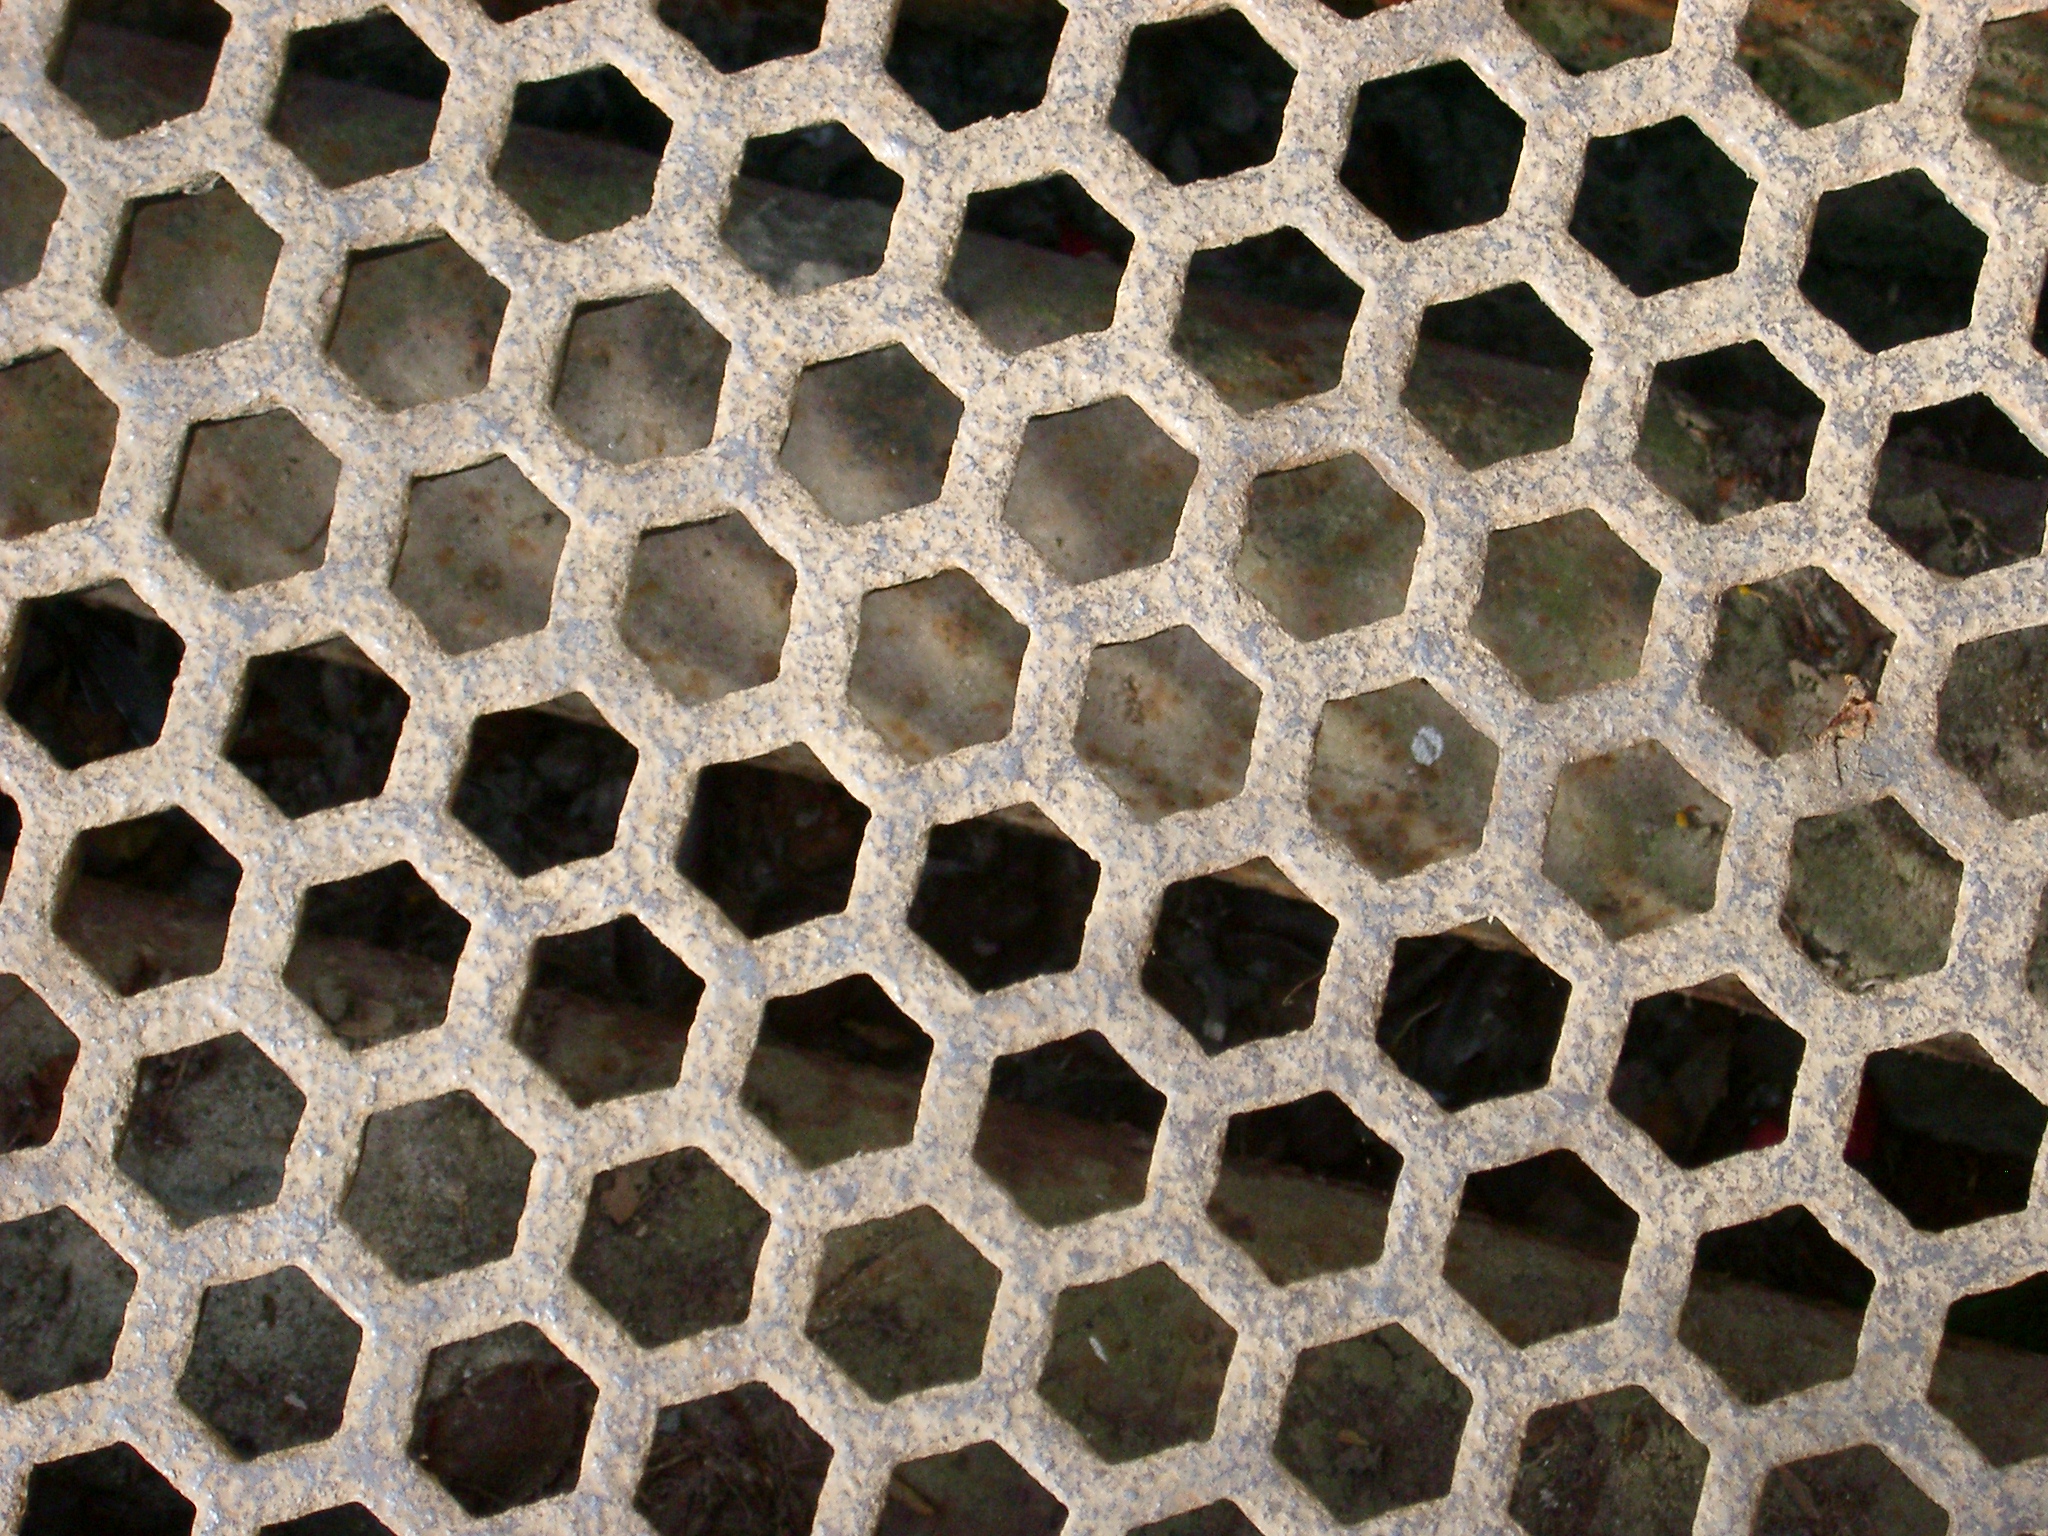 Hexagonal+grid+pattern